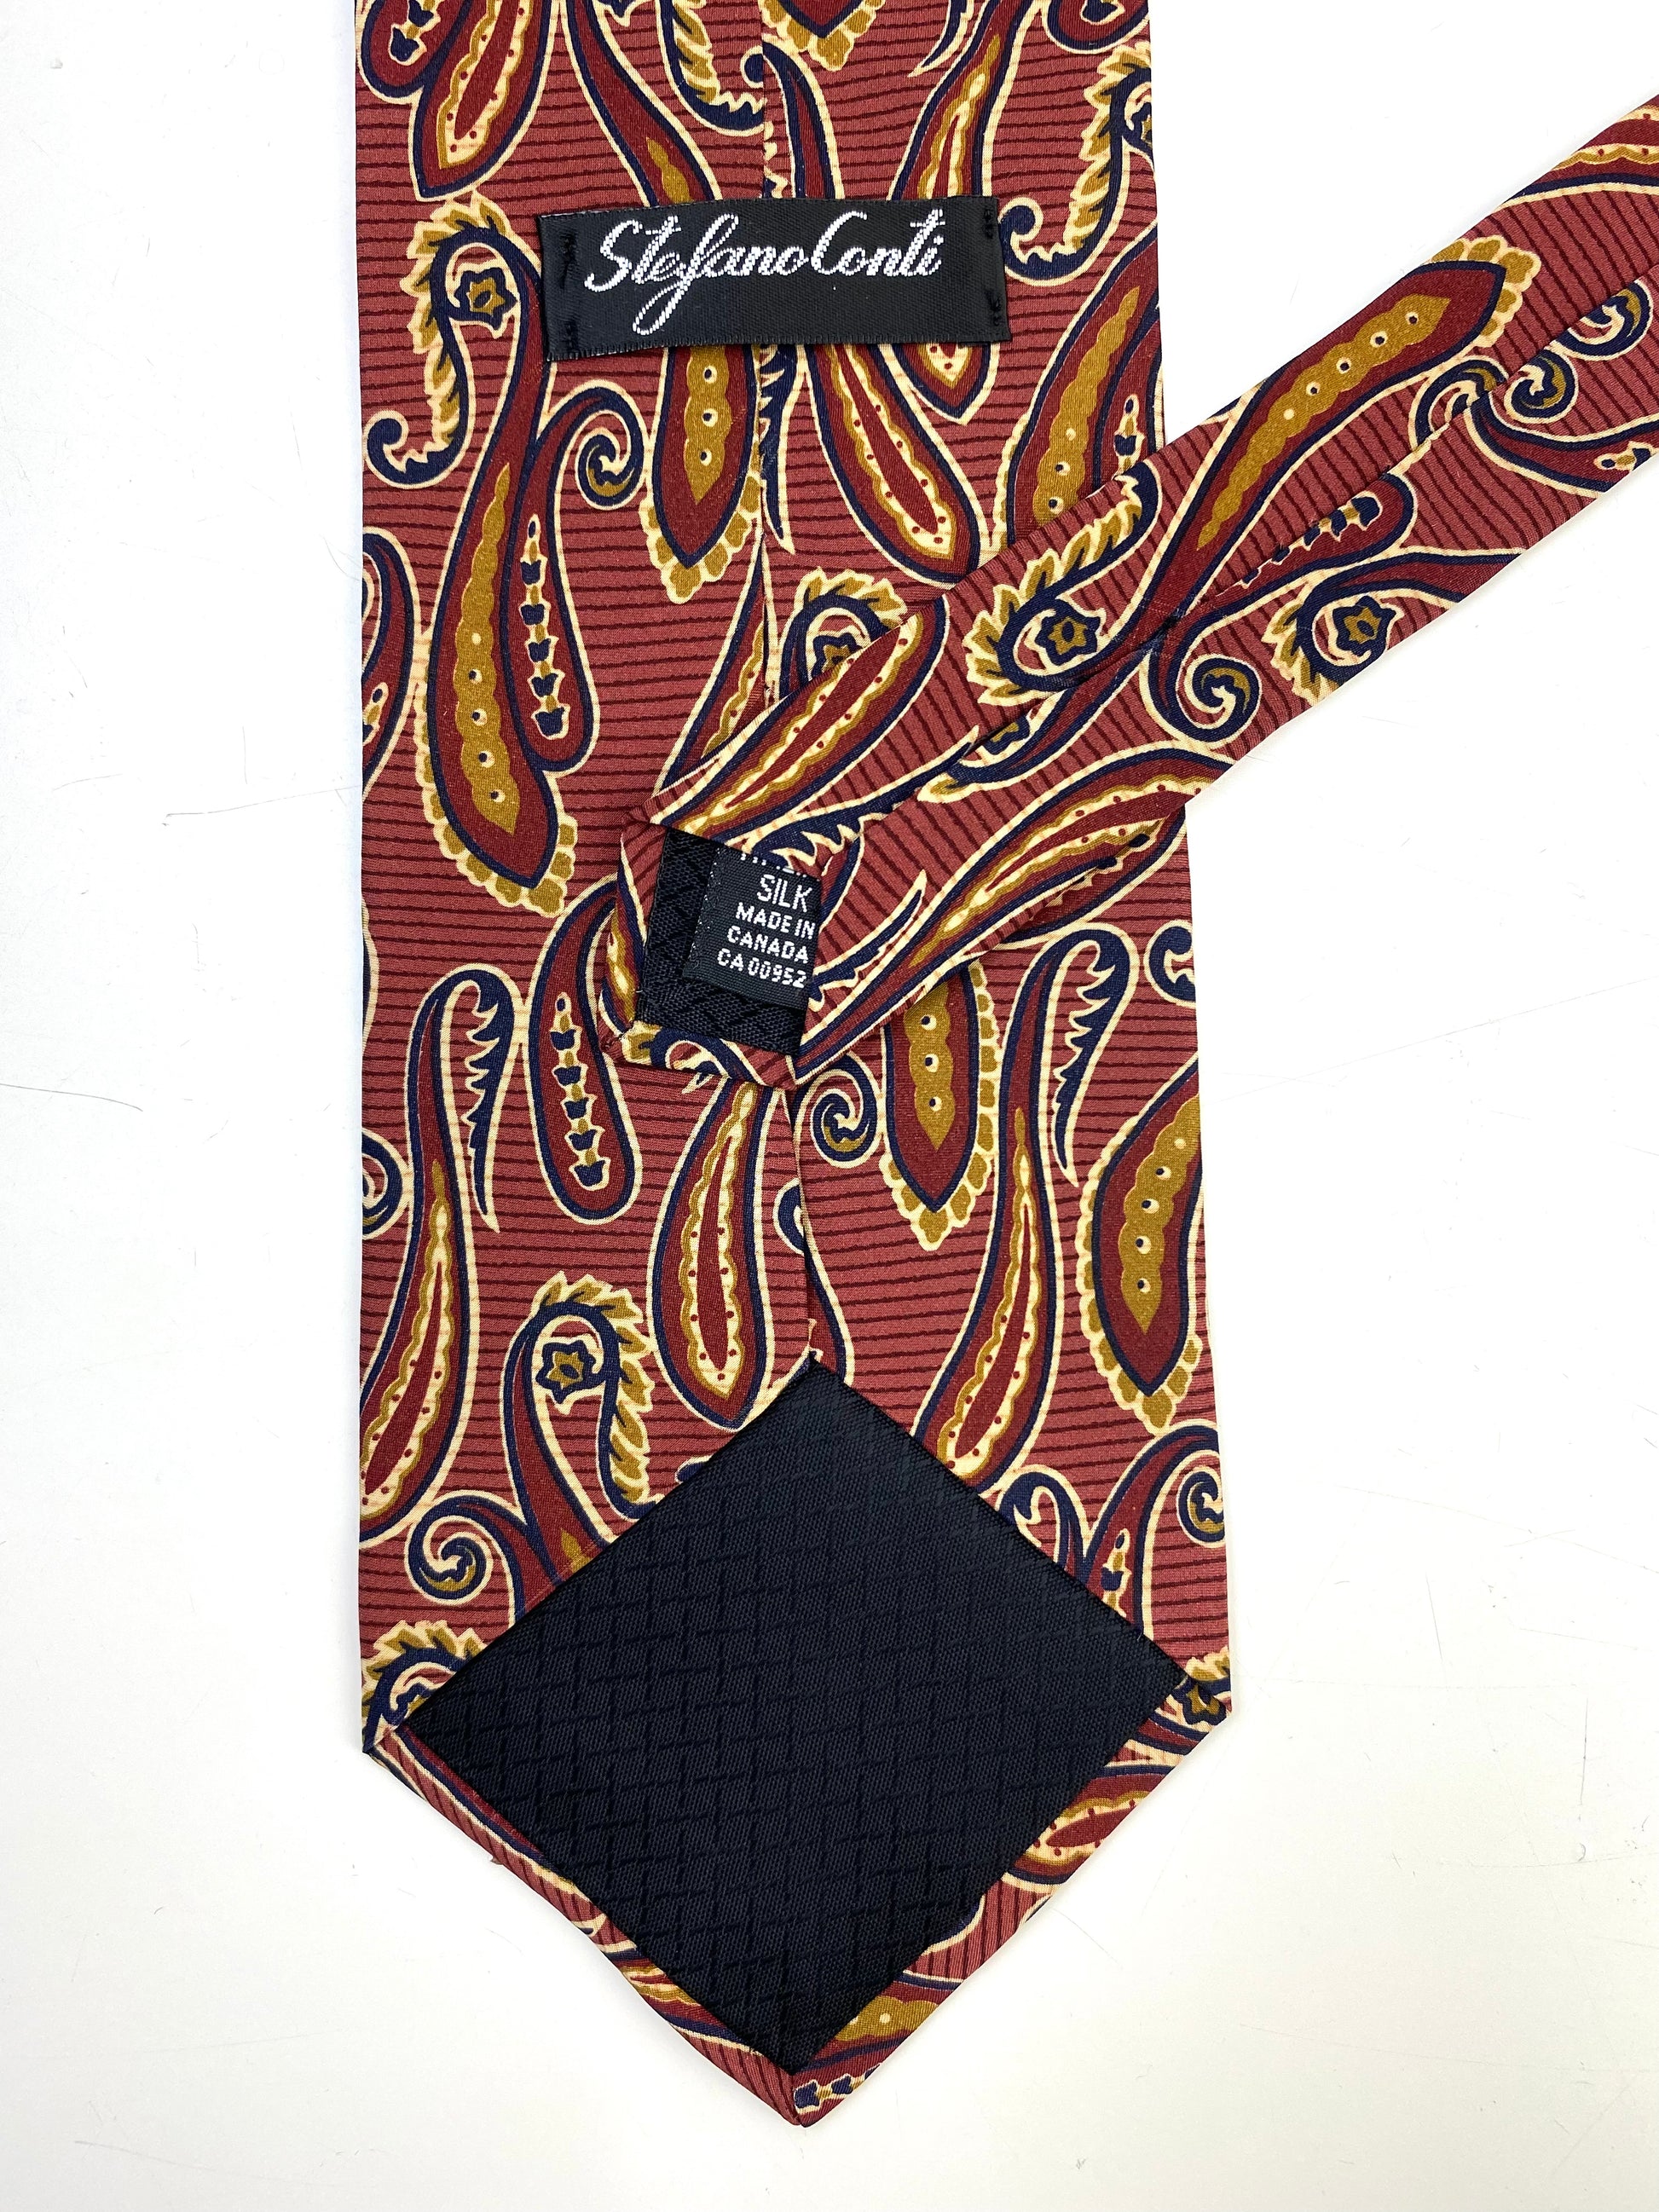 Back and labels of: 90s Deadstock Silk Necktie, Men's Vintage Wine/ Brown-Gold Paisley Pattern Tie, NOS